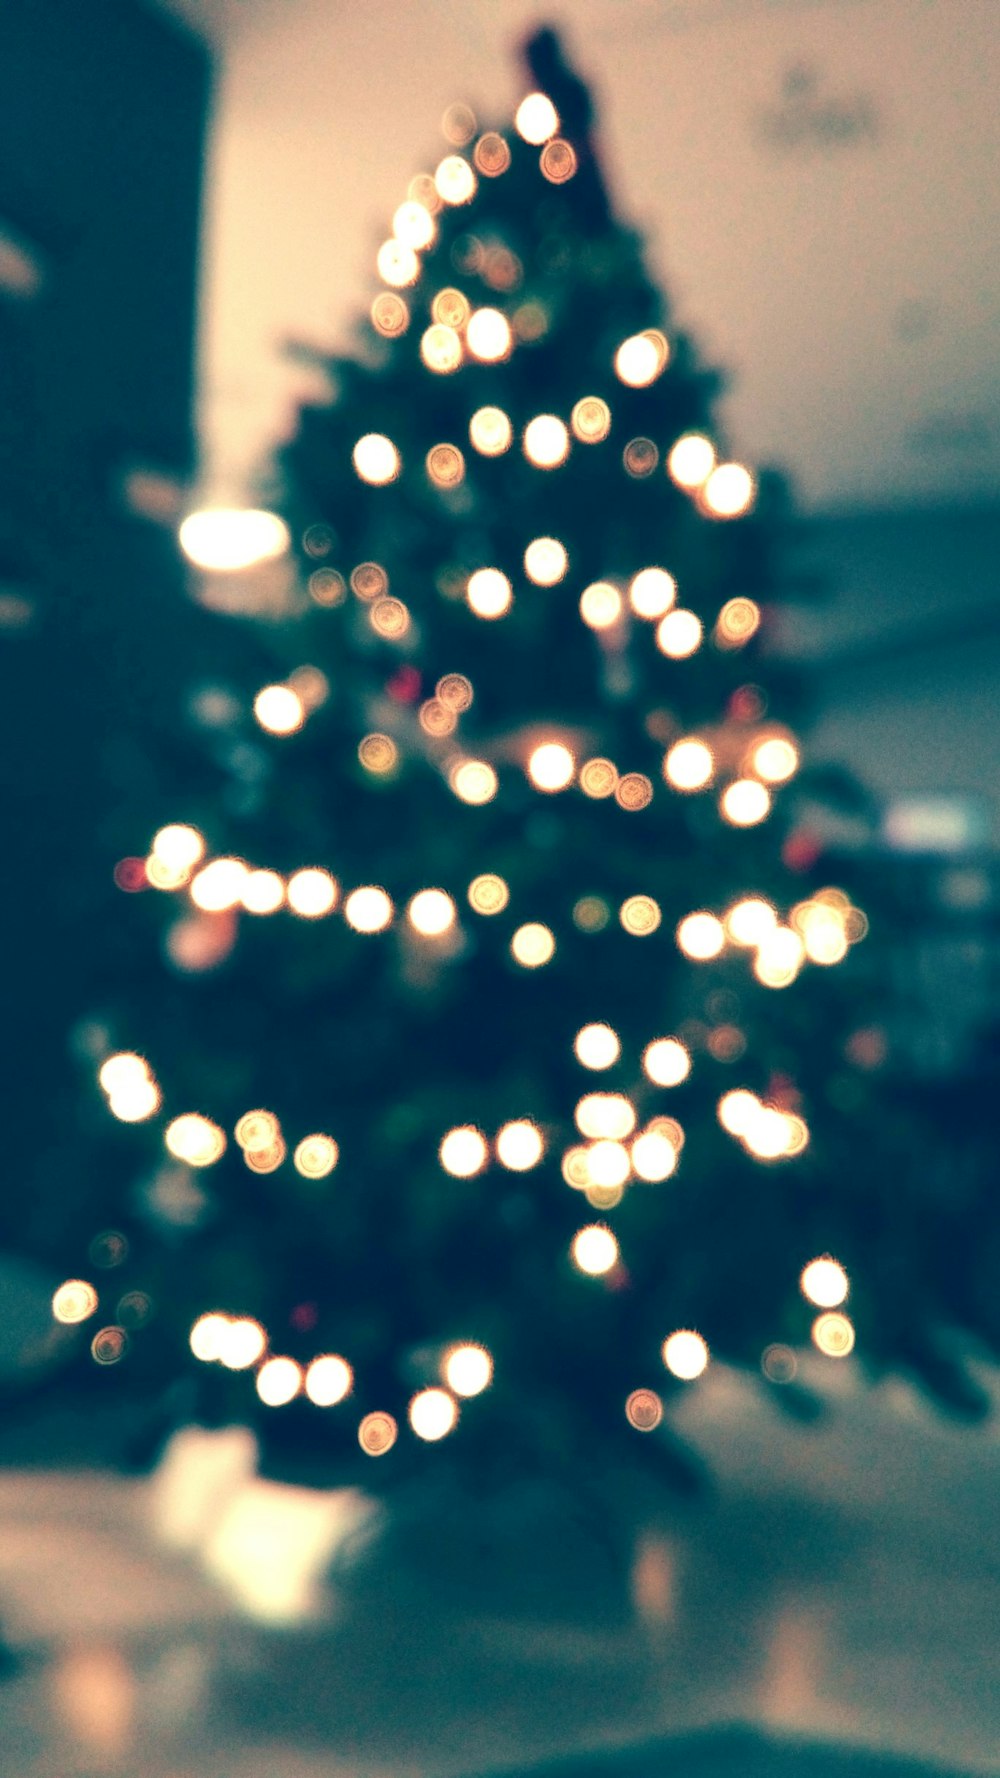 Sapin de Noël avec guirlandes lumineuses allumées